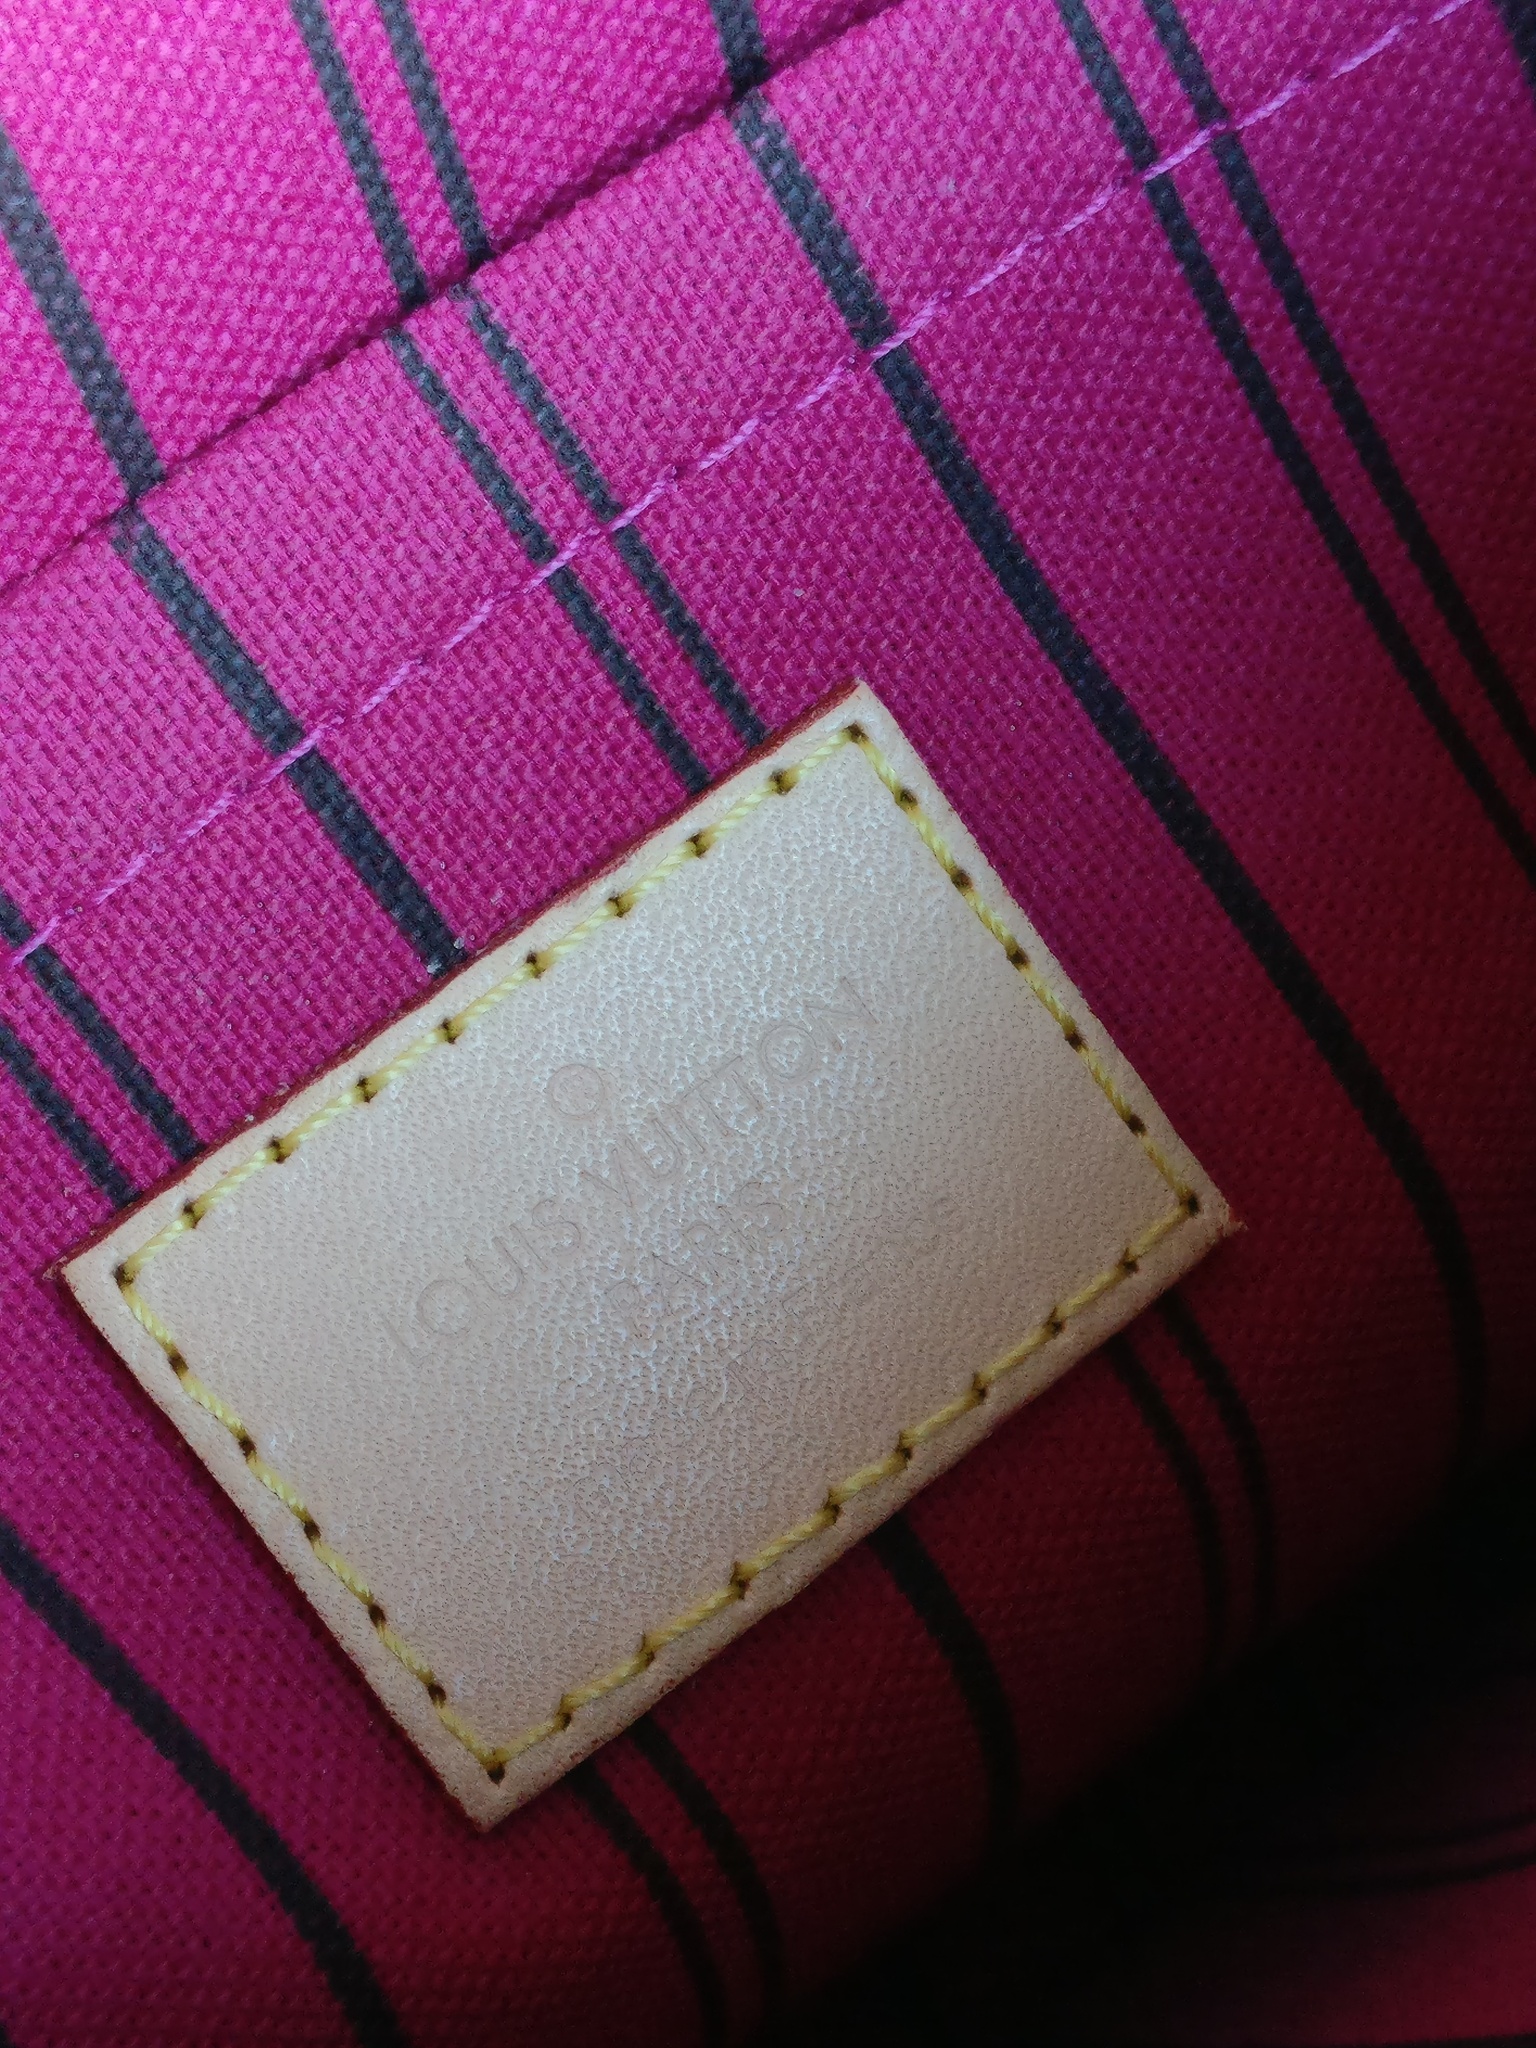 Louis Vuitton Neverfull MM pochette